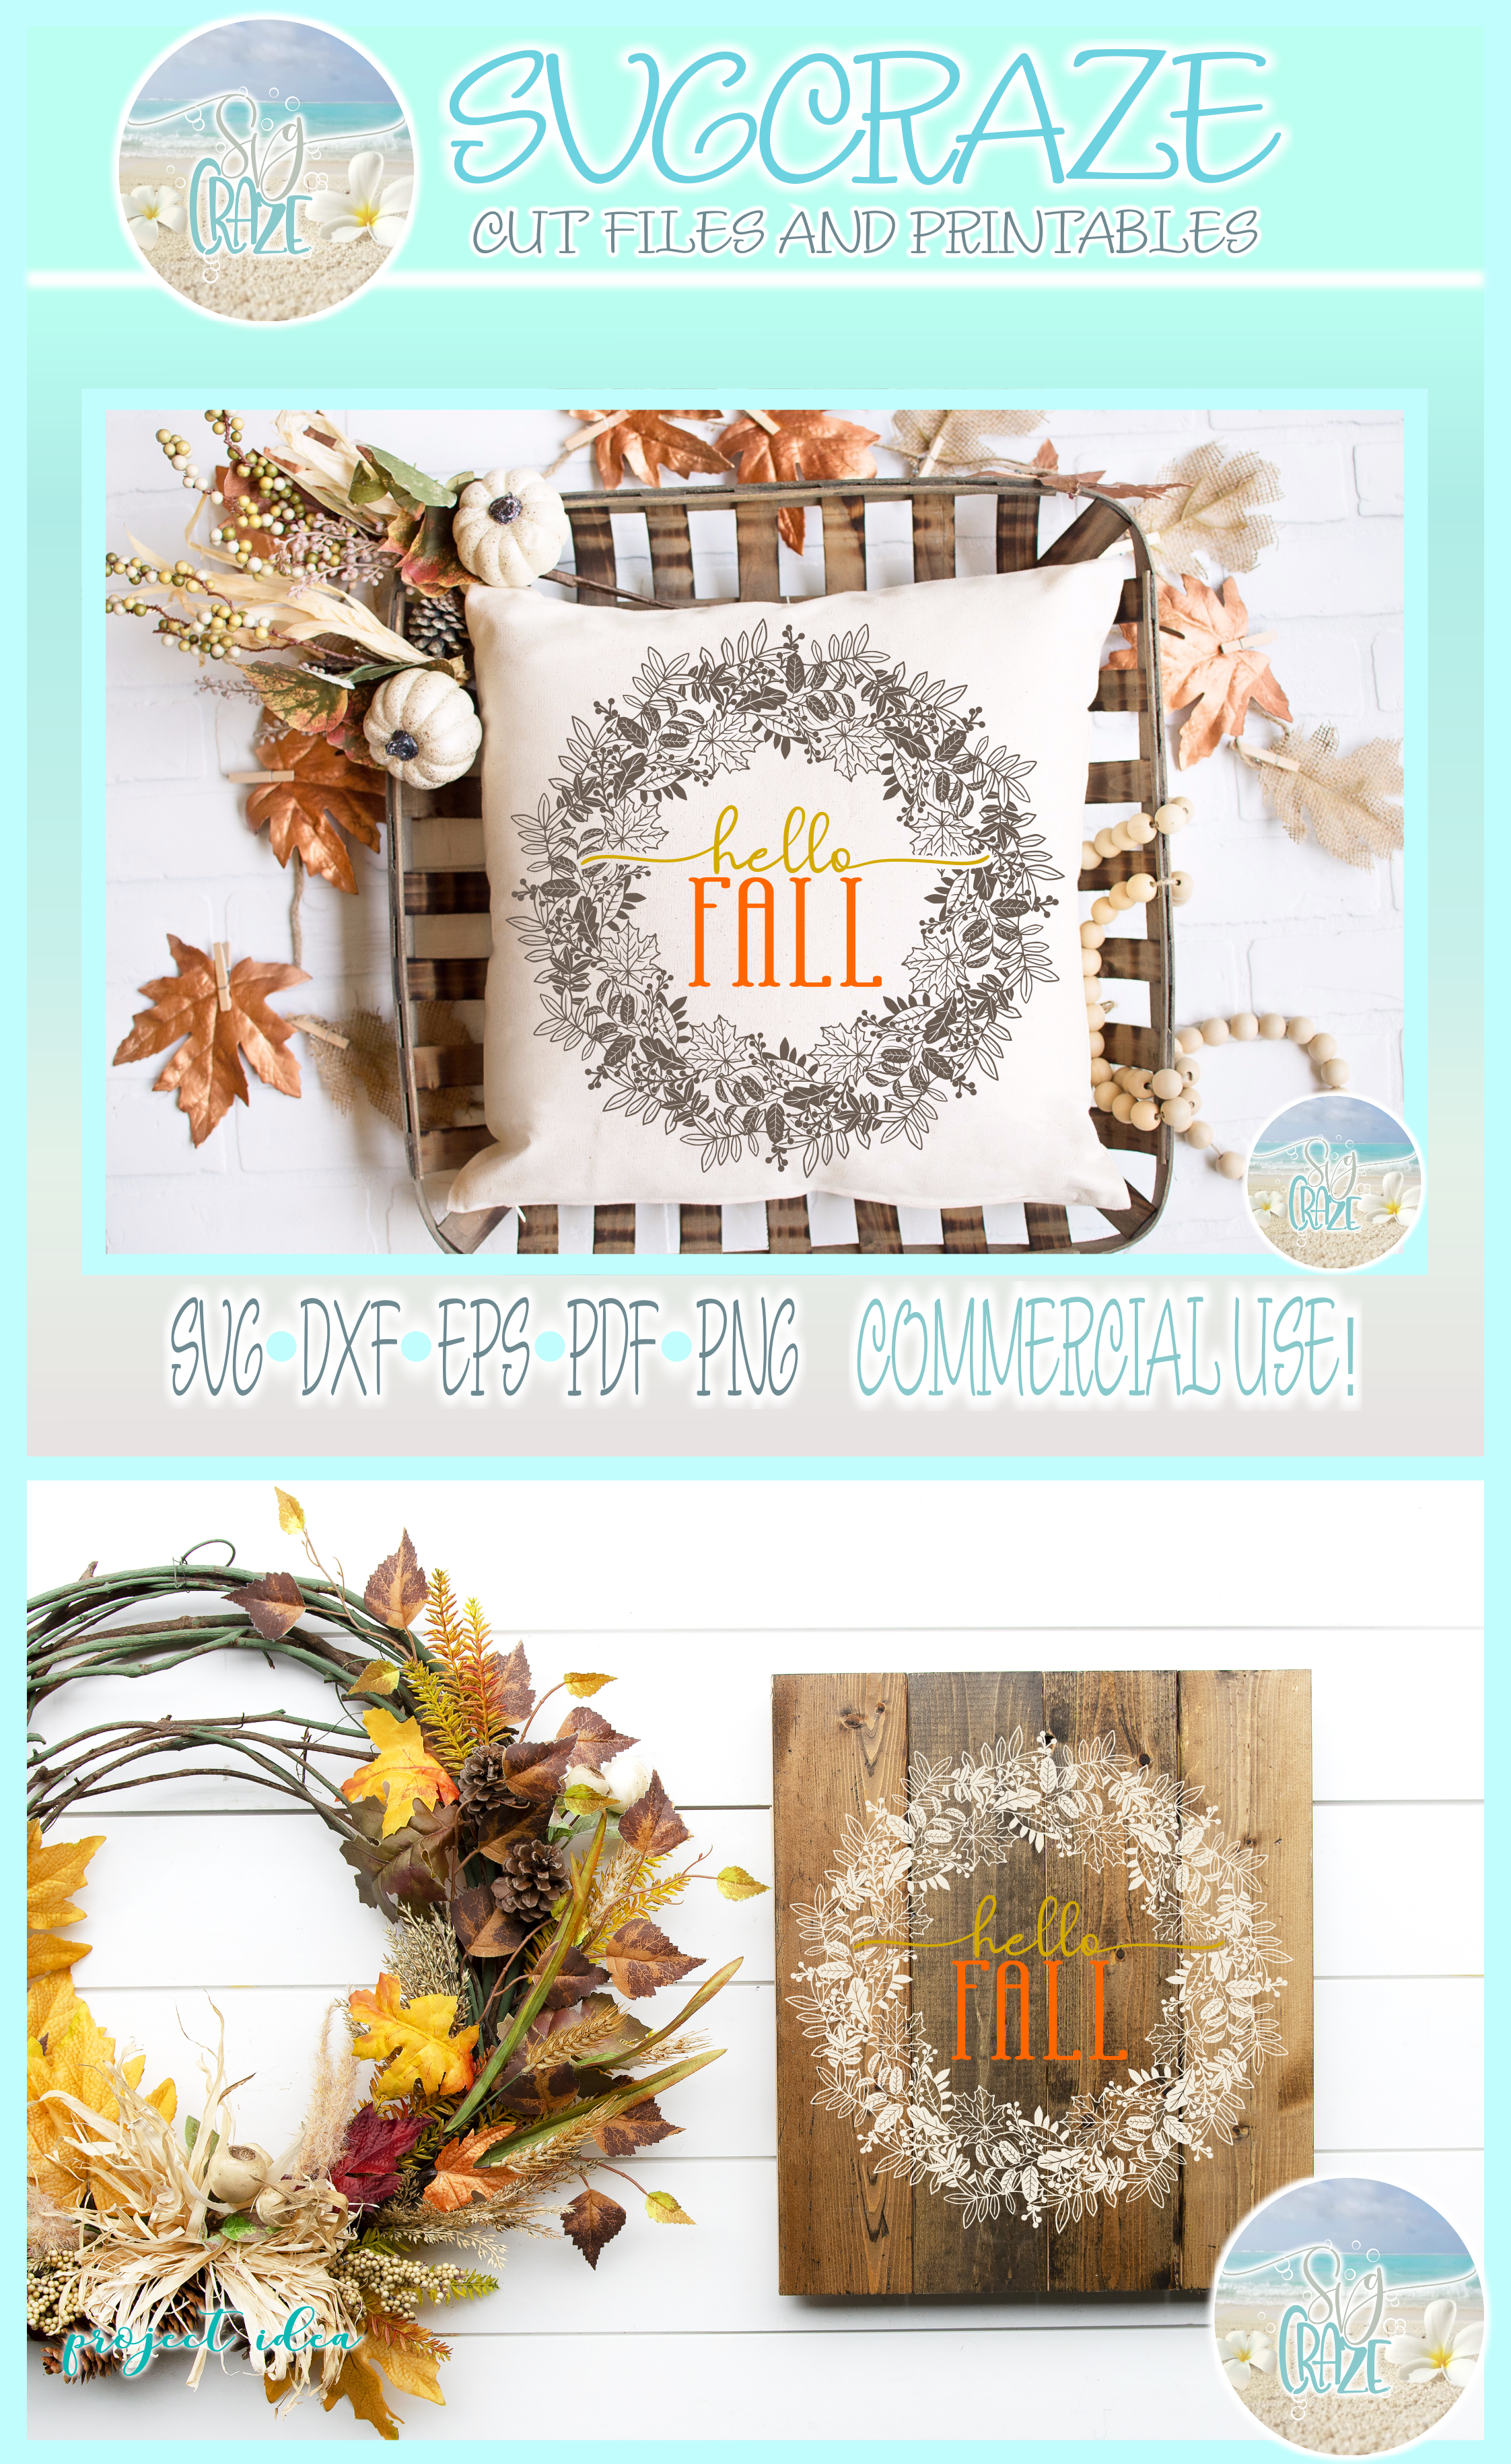 Download Hello Fall Leaf Wreath Autumn Mandala SVG